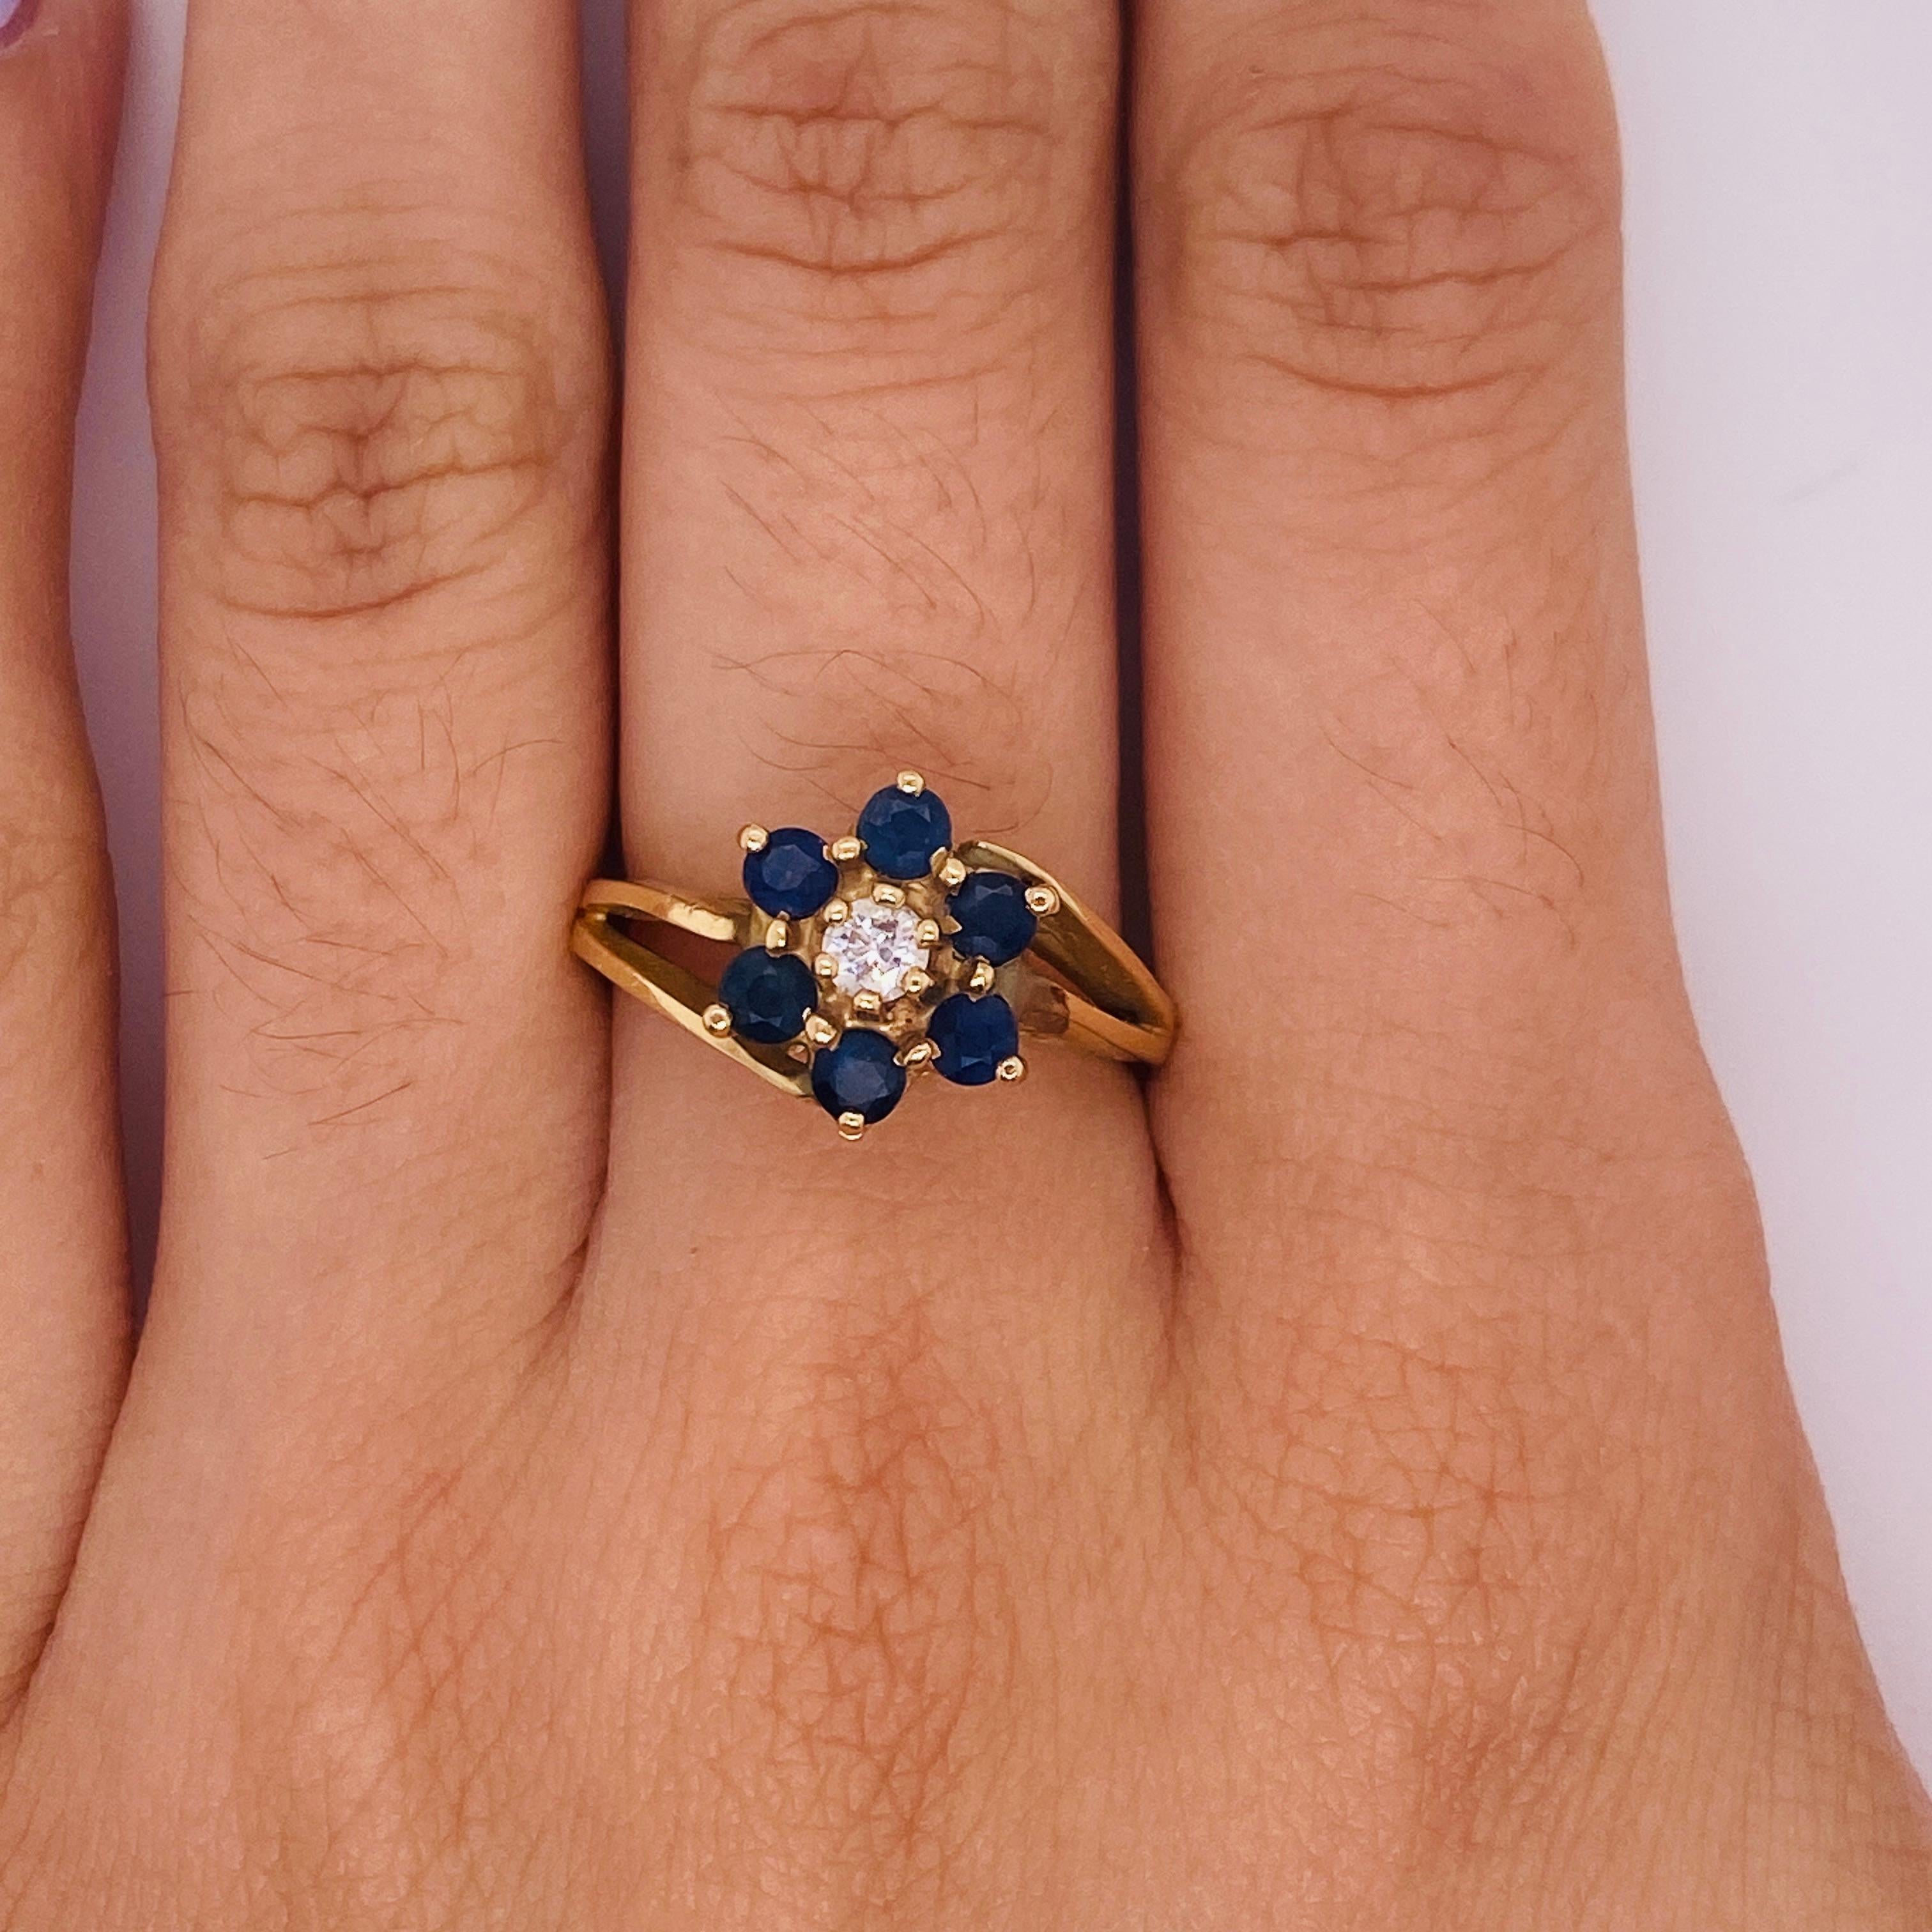 1990s diamond cluster ring